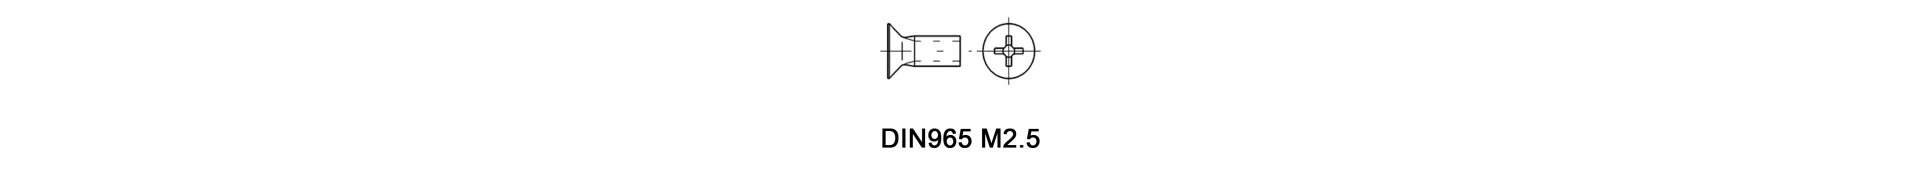 DIN965 M2.5